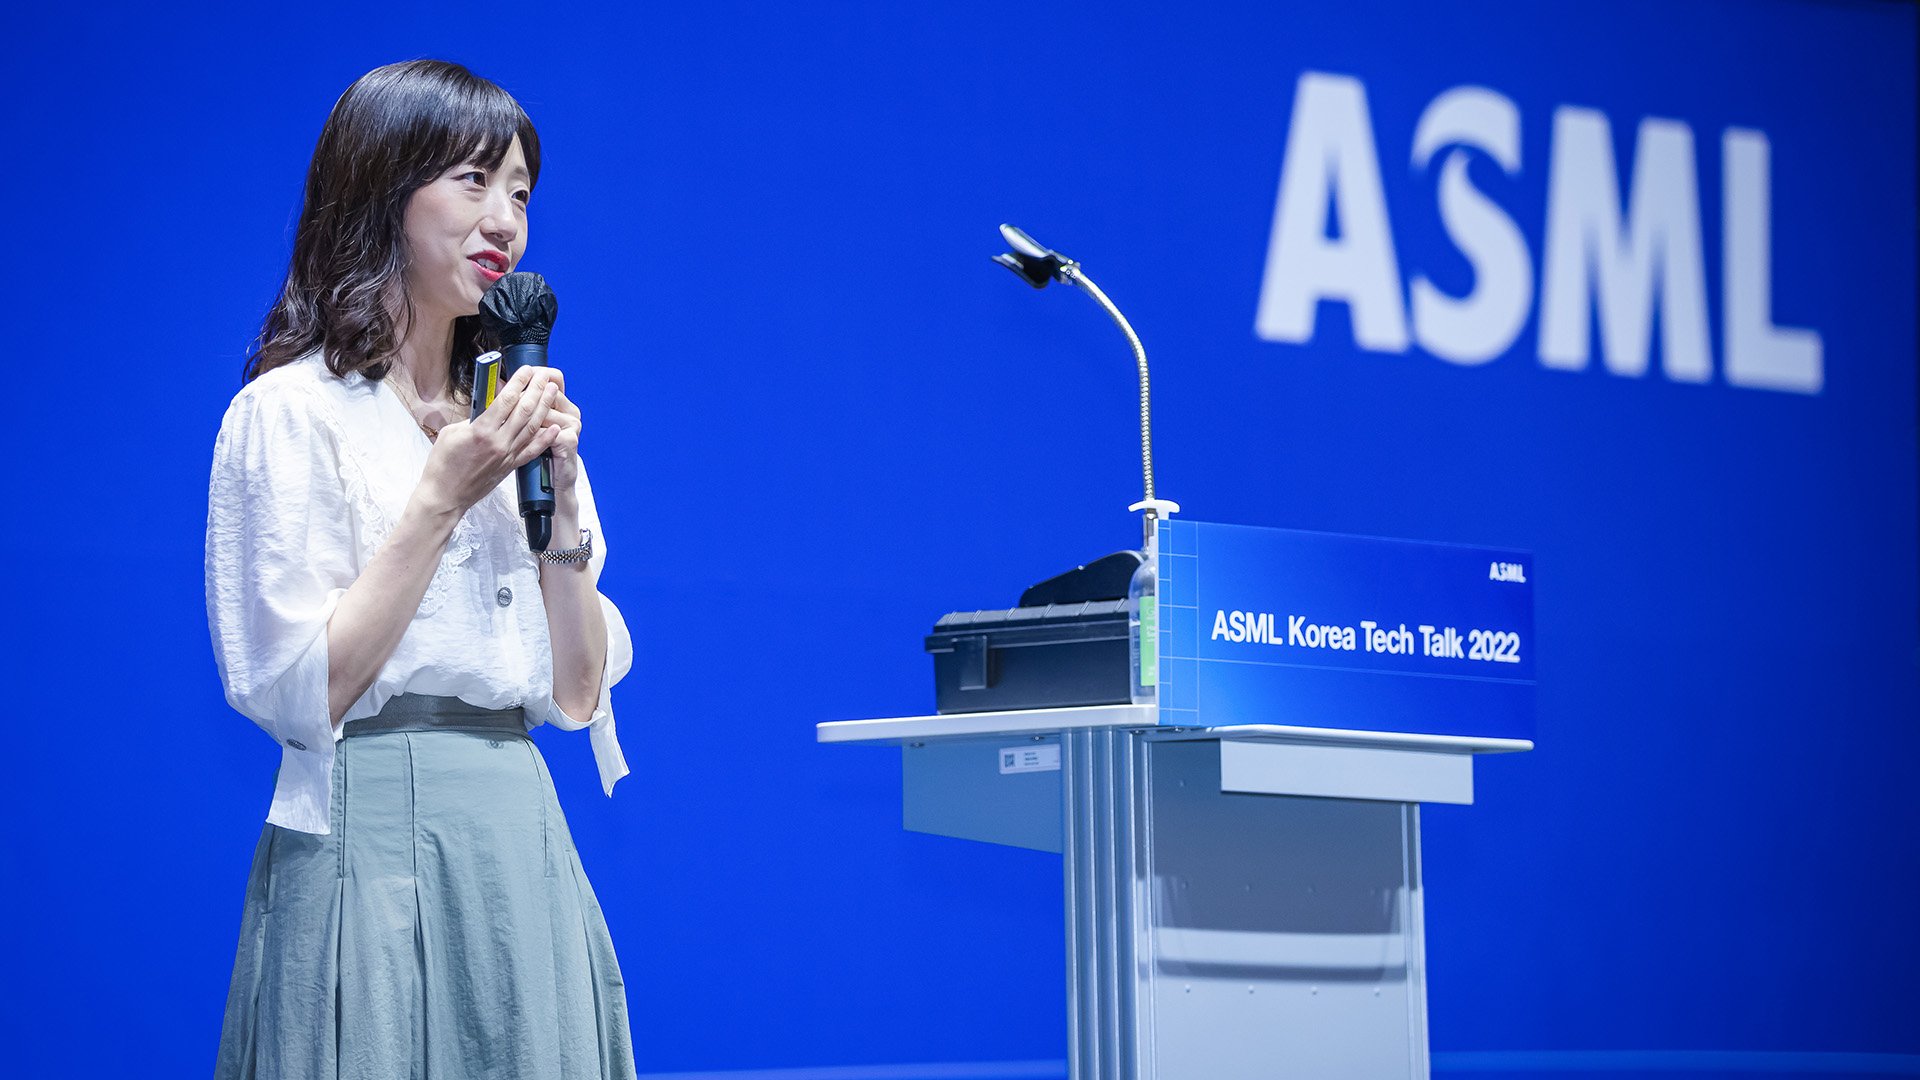 Speaker on stage at the Korean Tech Talk 2019